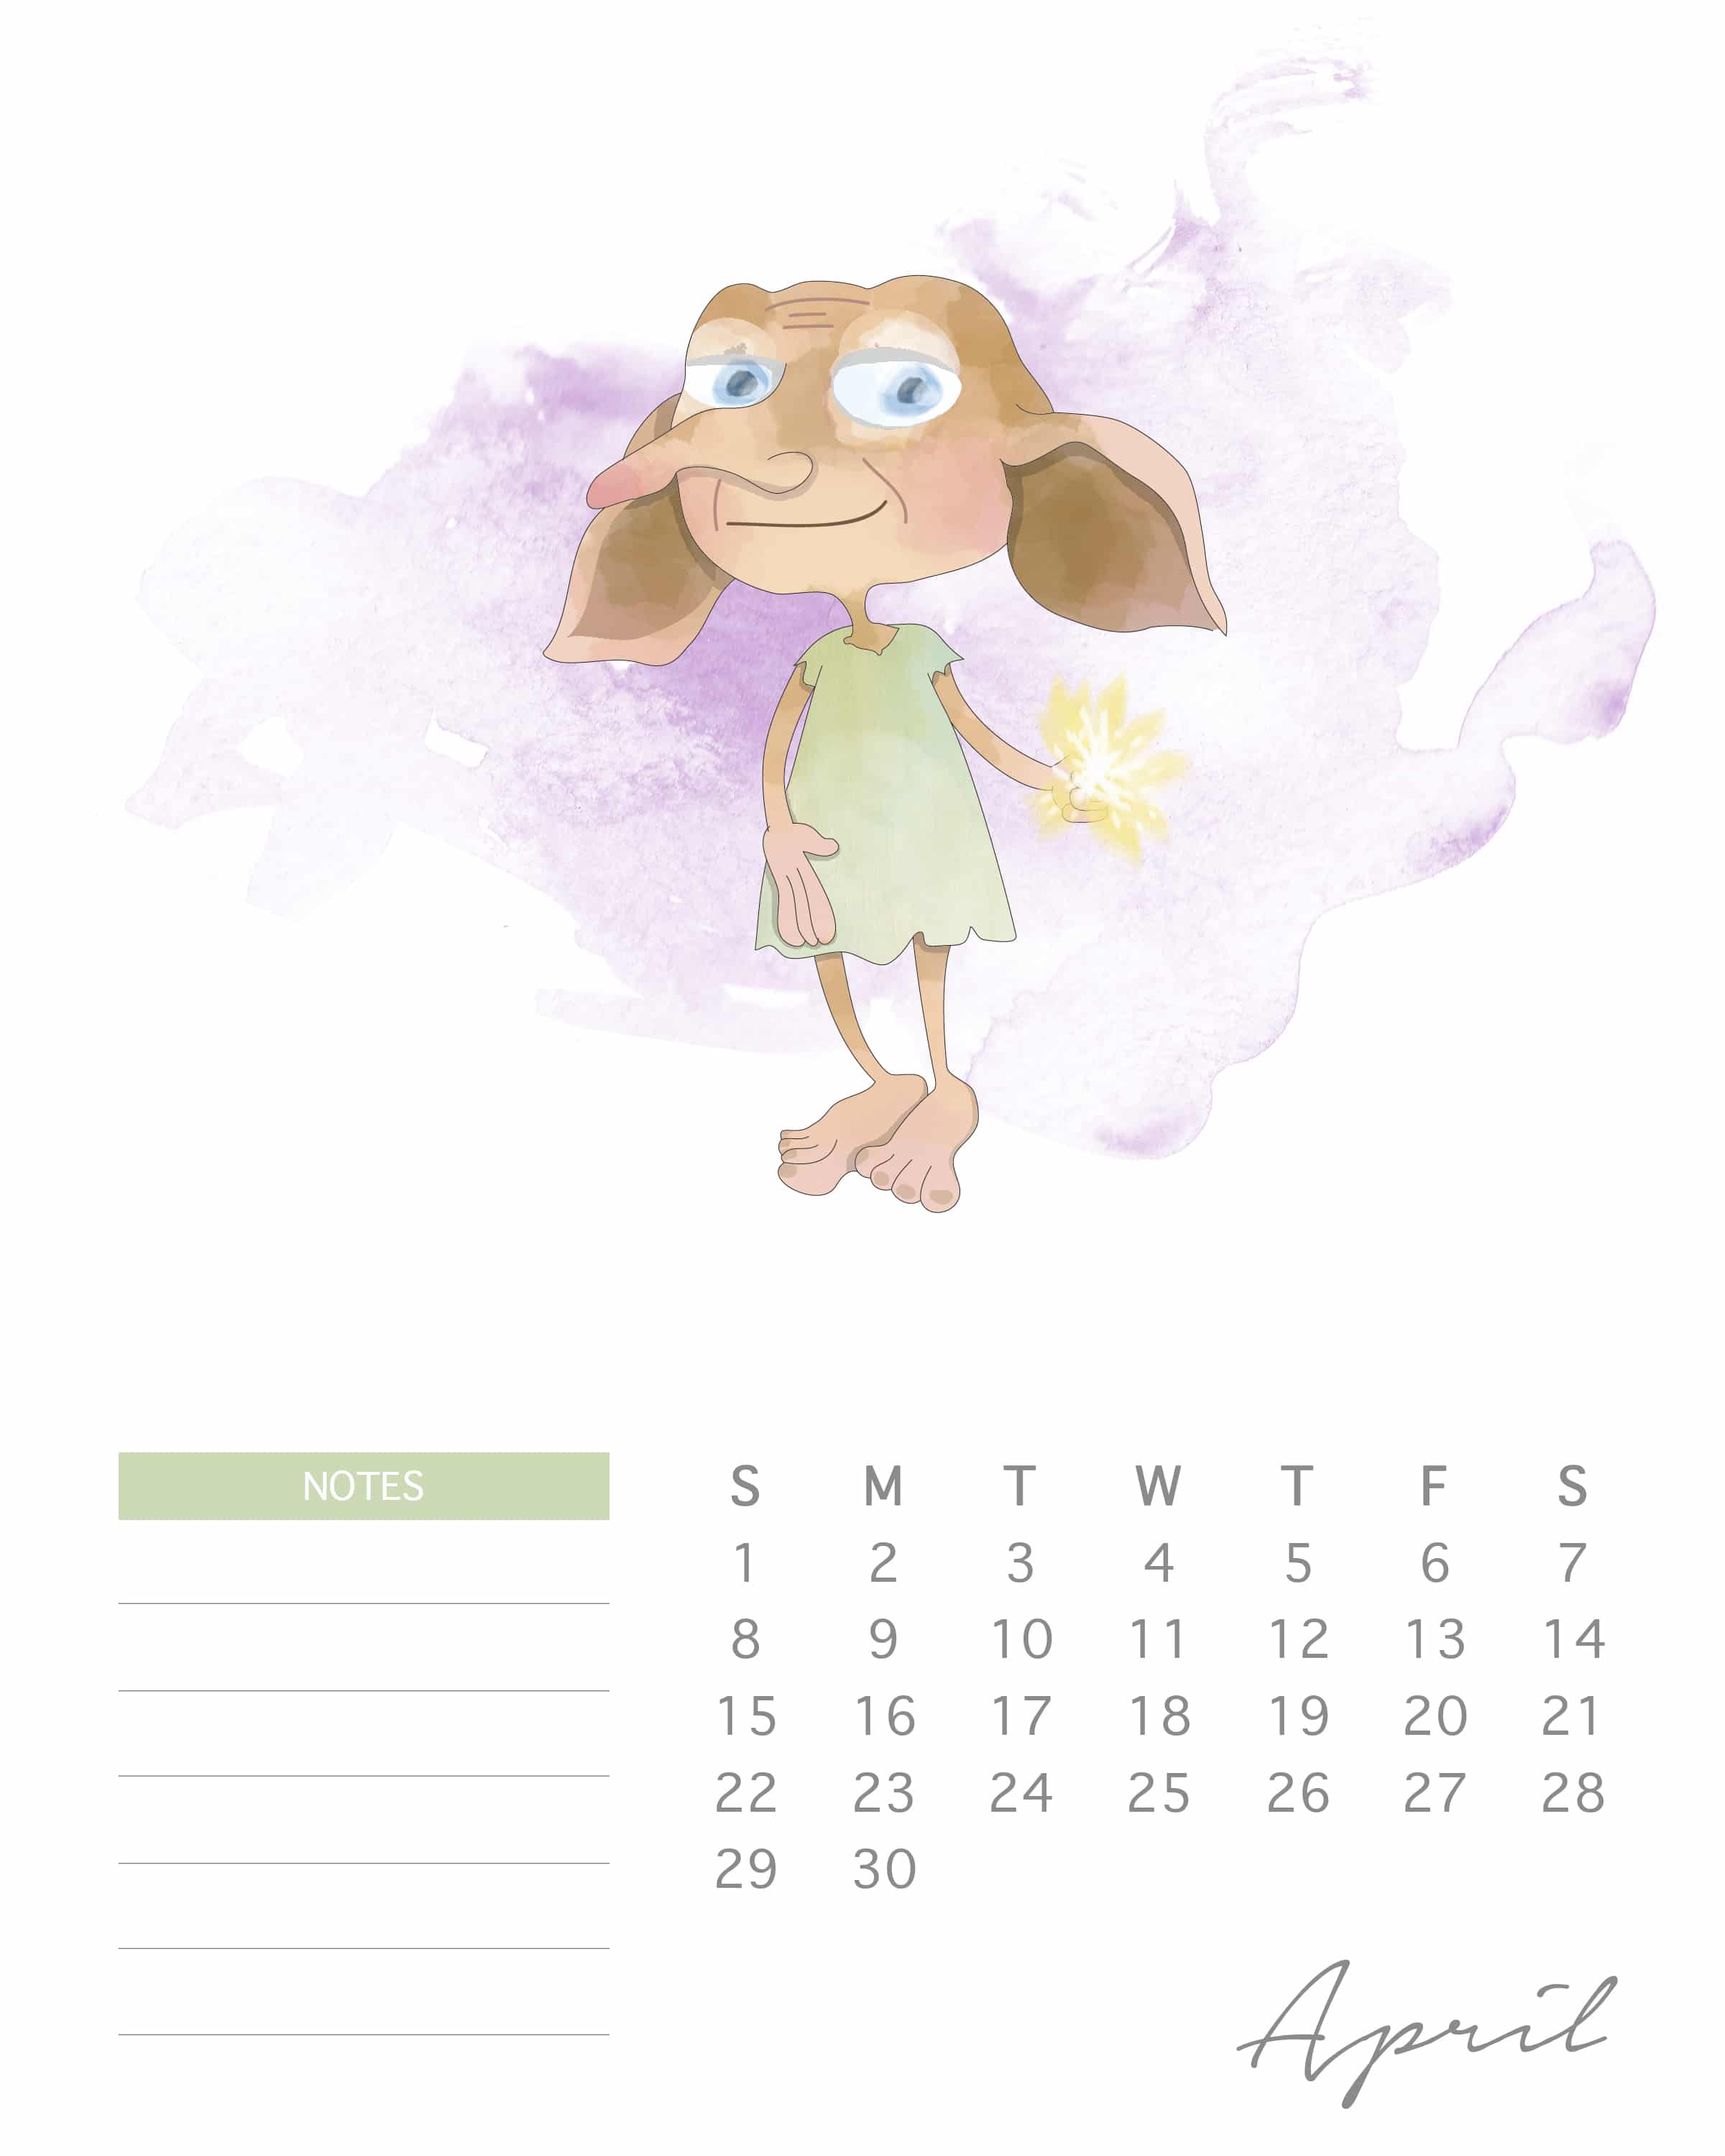 Calendar April 2018